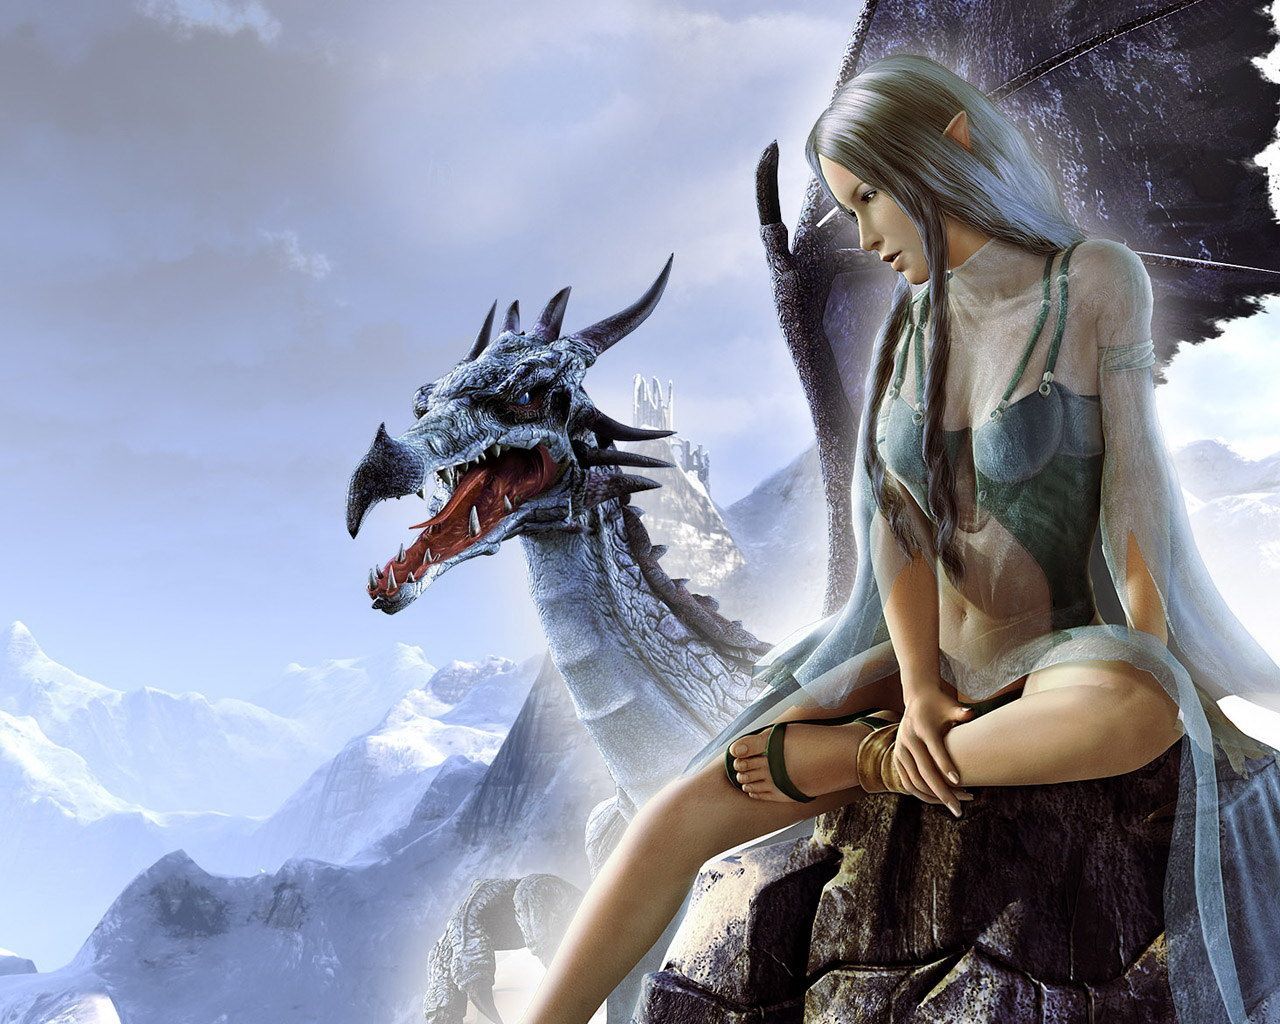 Download wallpaper: beautiful girl elf woman and dragon, download photo, wallpaper for desktop, elf, dragon. Fantasy girl, Dragon girl, Fantasy dragon